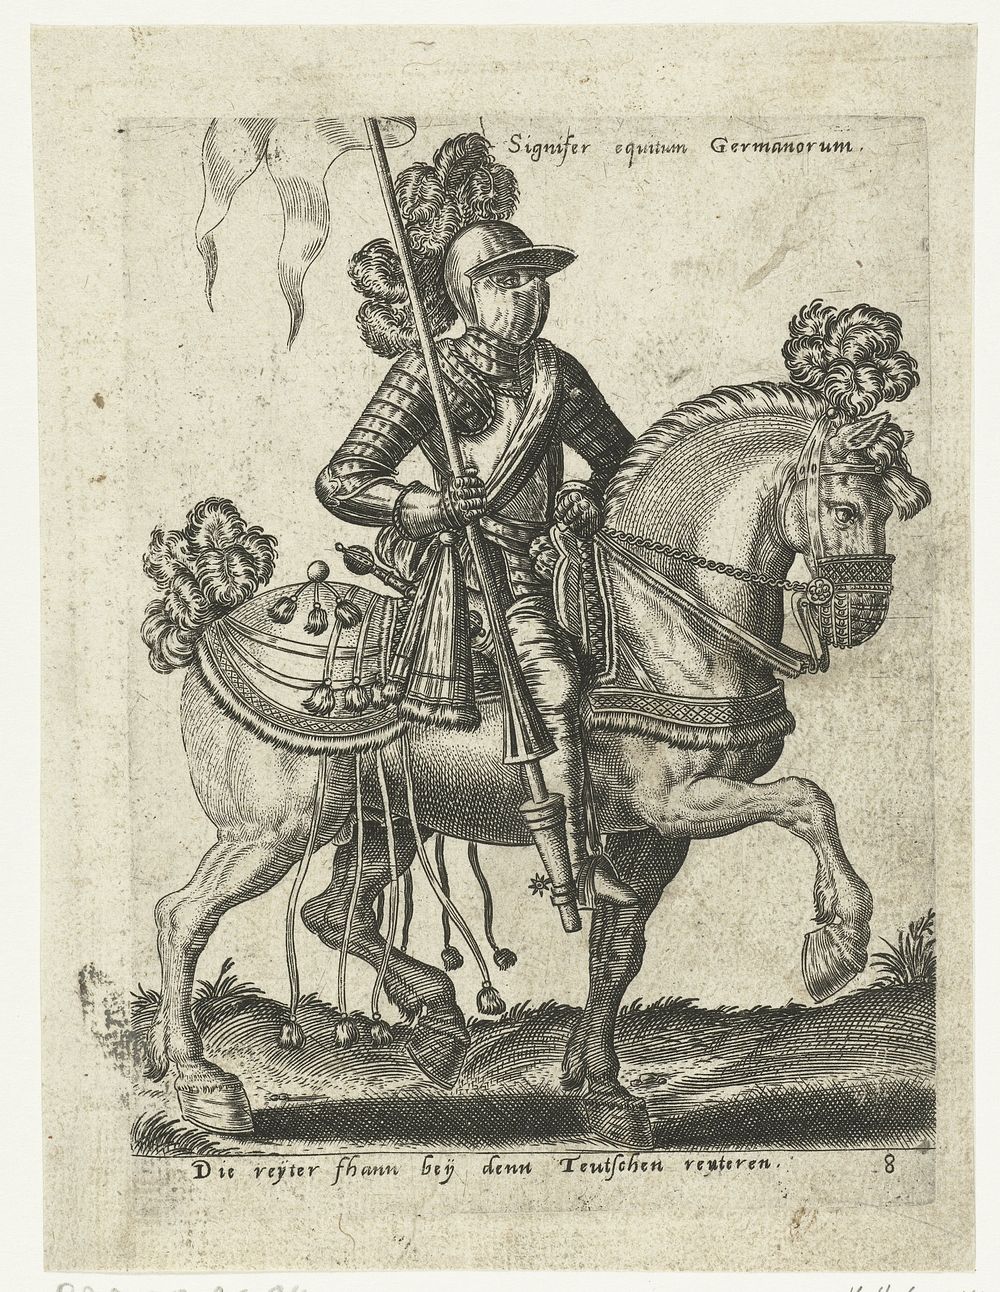 Duitse ruiter in harnas (1577) by Abraham de Bruyn and Caspar Rutz